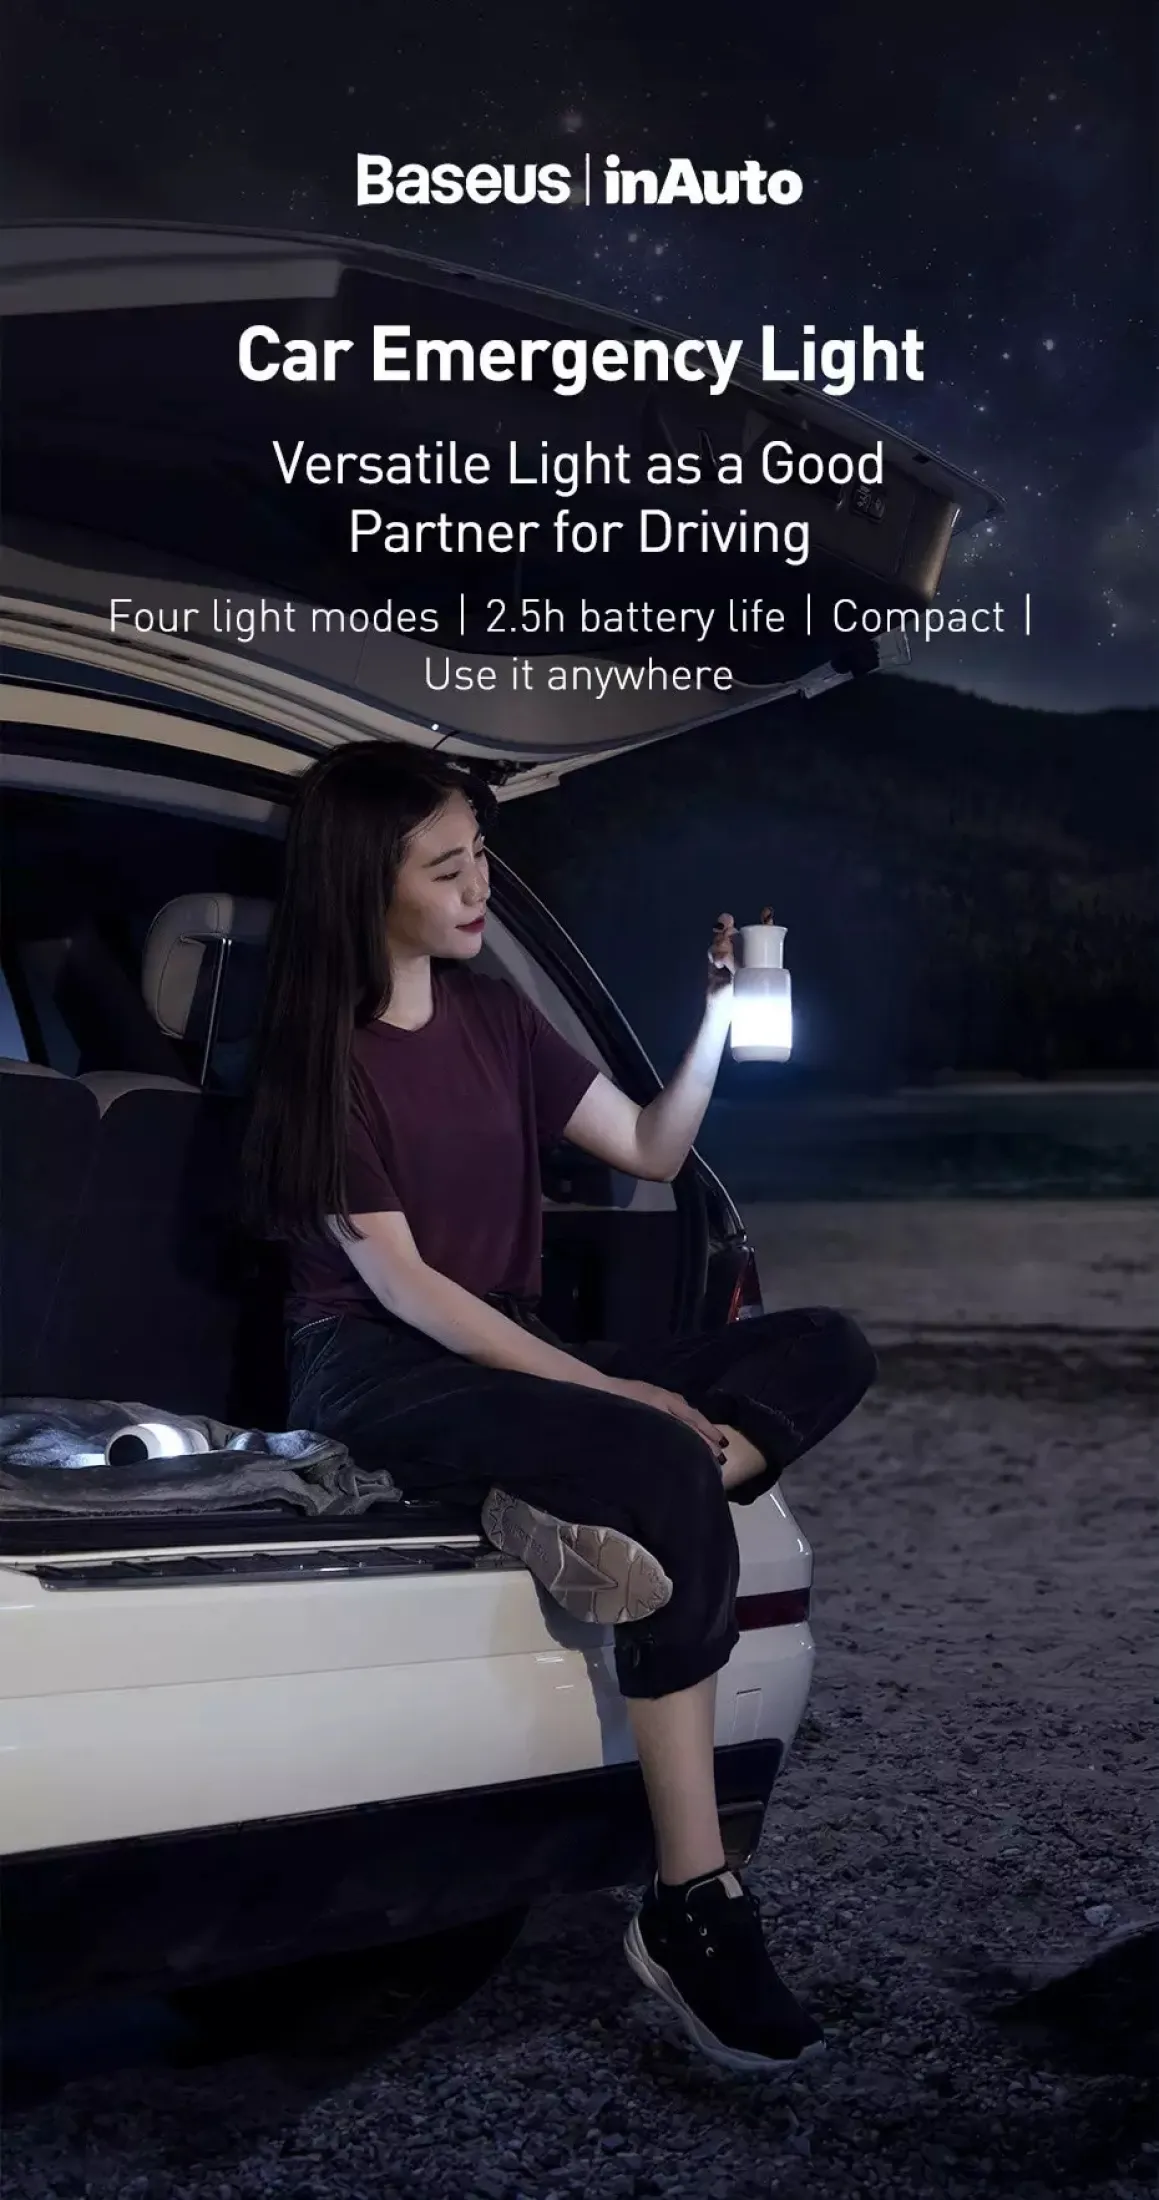 Baseus Starlit Night Car Emergency Light Warning Lamp buy online best price in pakistan